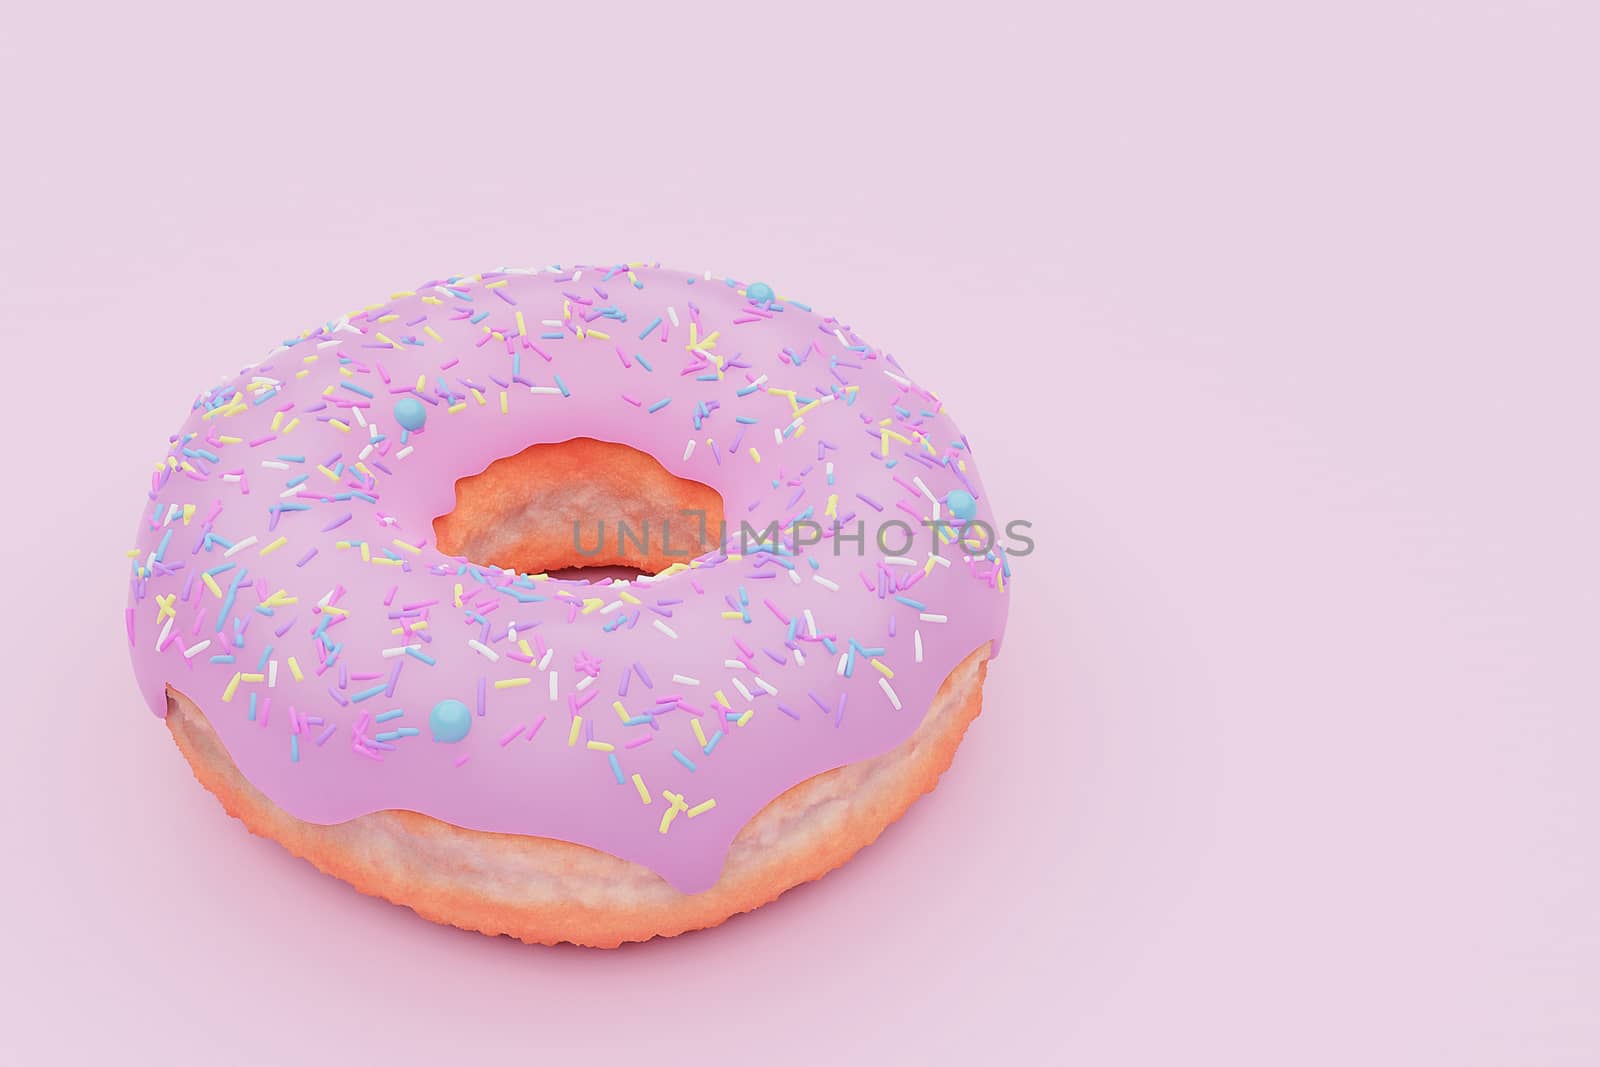 Tasty pink glazed donut with colorful sprinkles on pink pastel colors background.3d model and illustration.